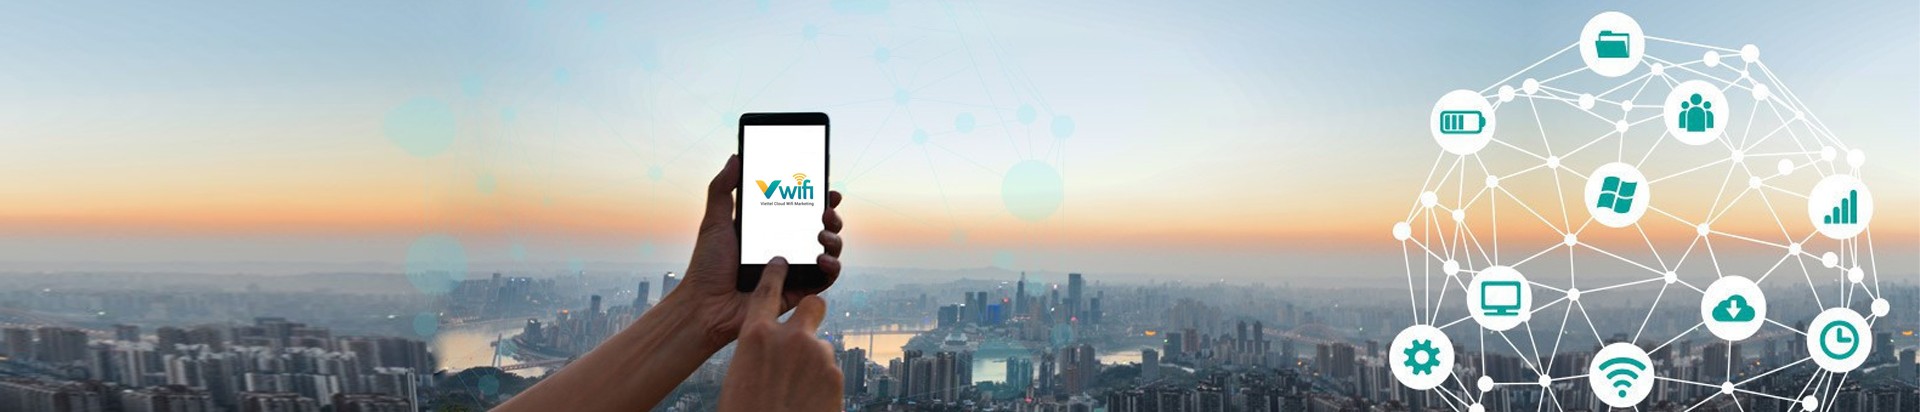 vWIFI – VIETTEL CLOUD WIFI MARKETING